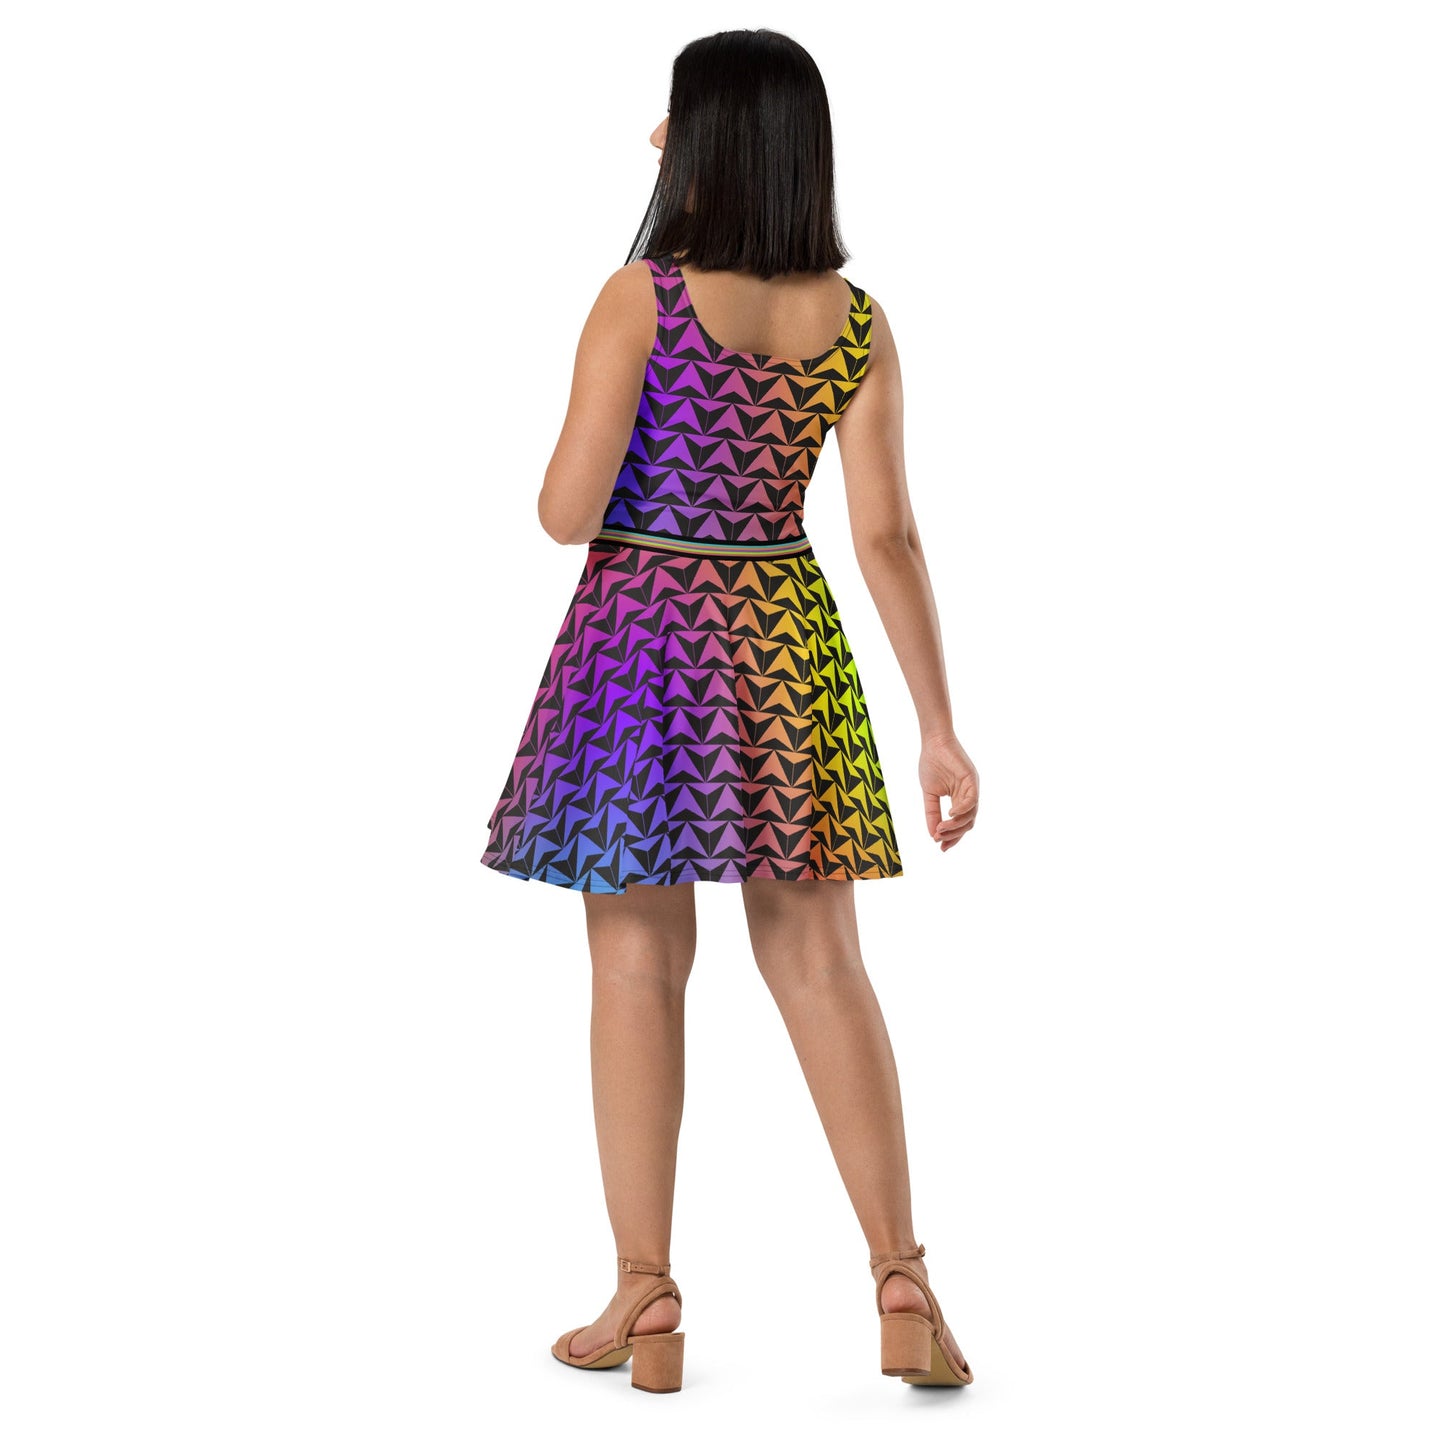 Spaceship Inspired Neon World Skater Dress- Cosplay, Bounding, Costume cosplaydisney adultdisney dress#tag4##tag5##tag6#